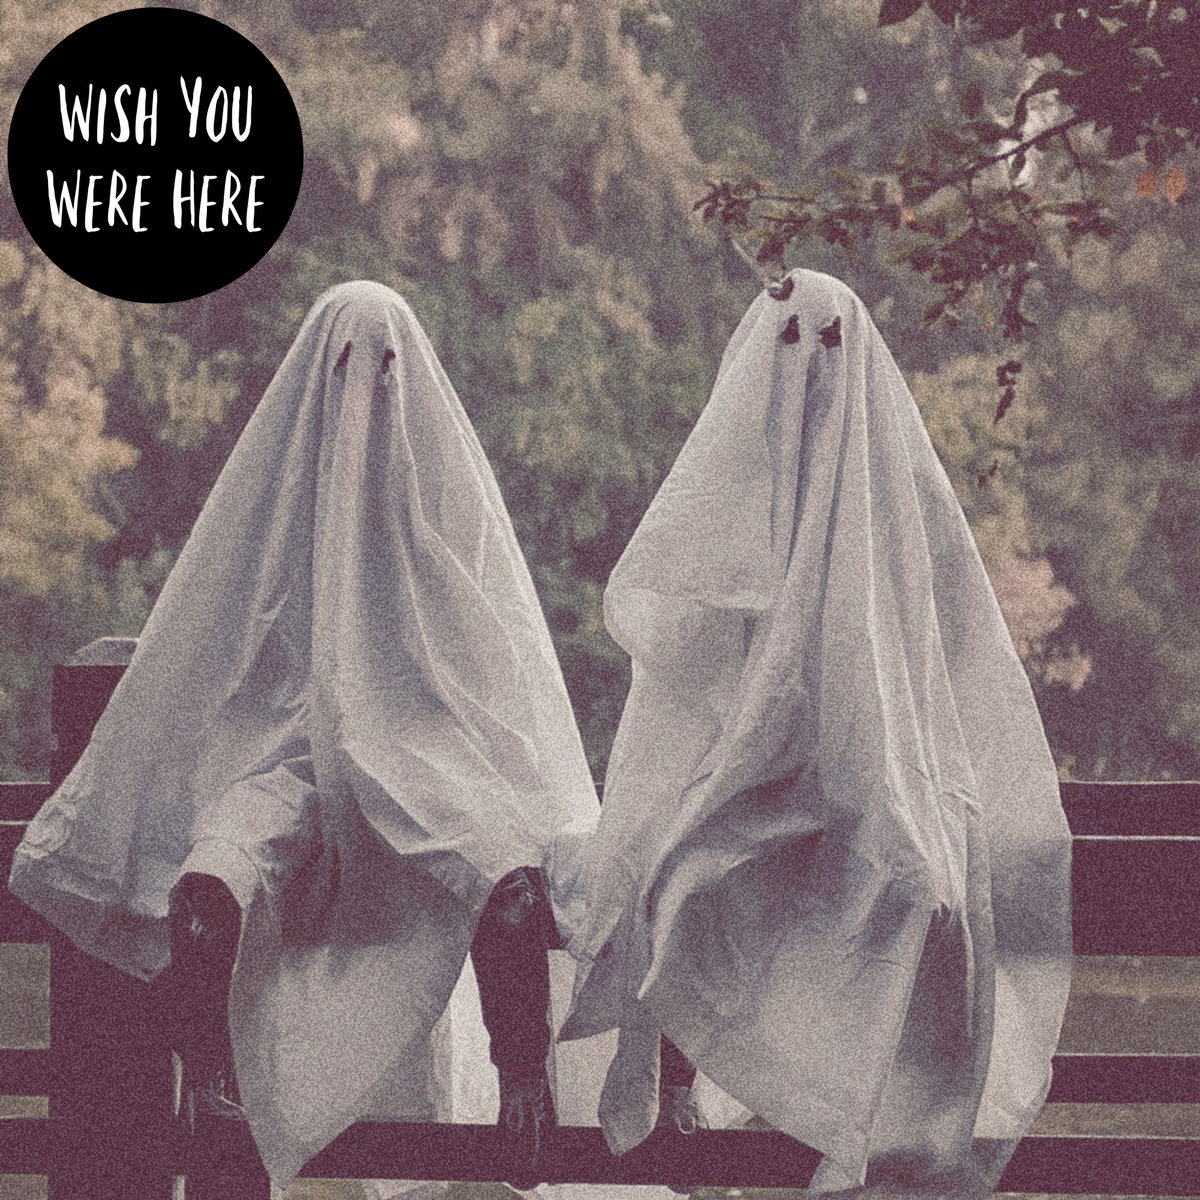 Listen Up – Haunt Me – Wish You Were Here